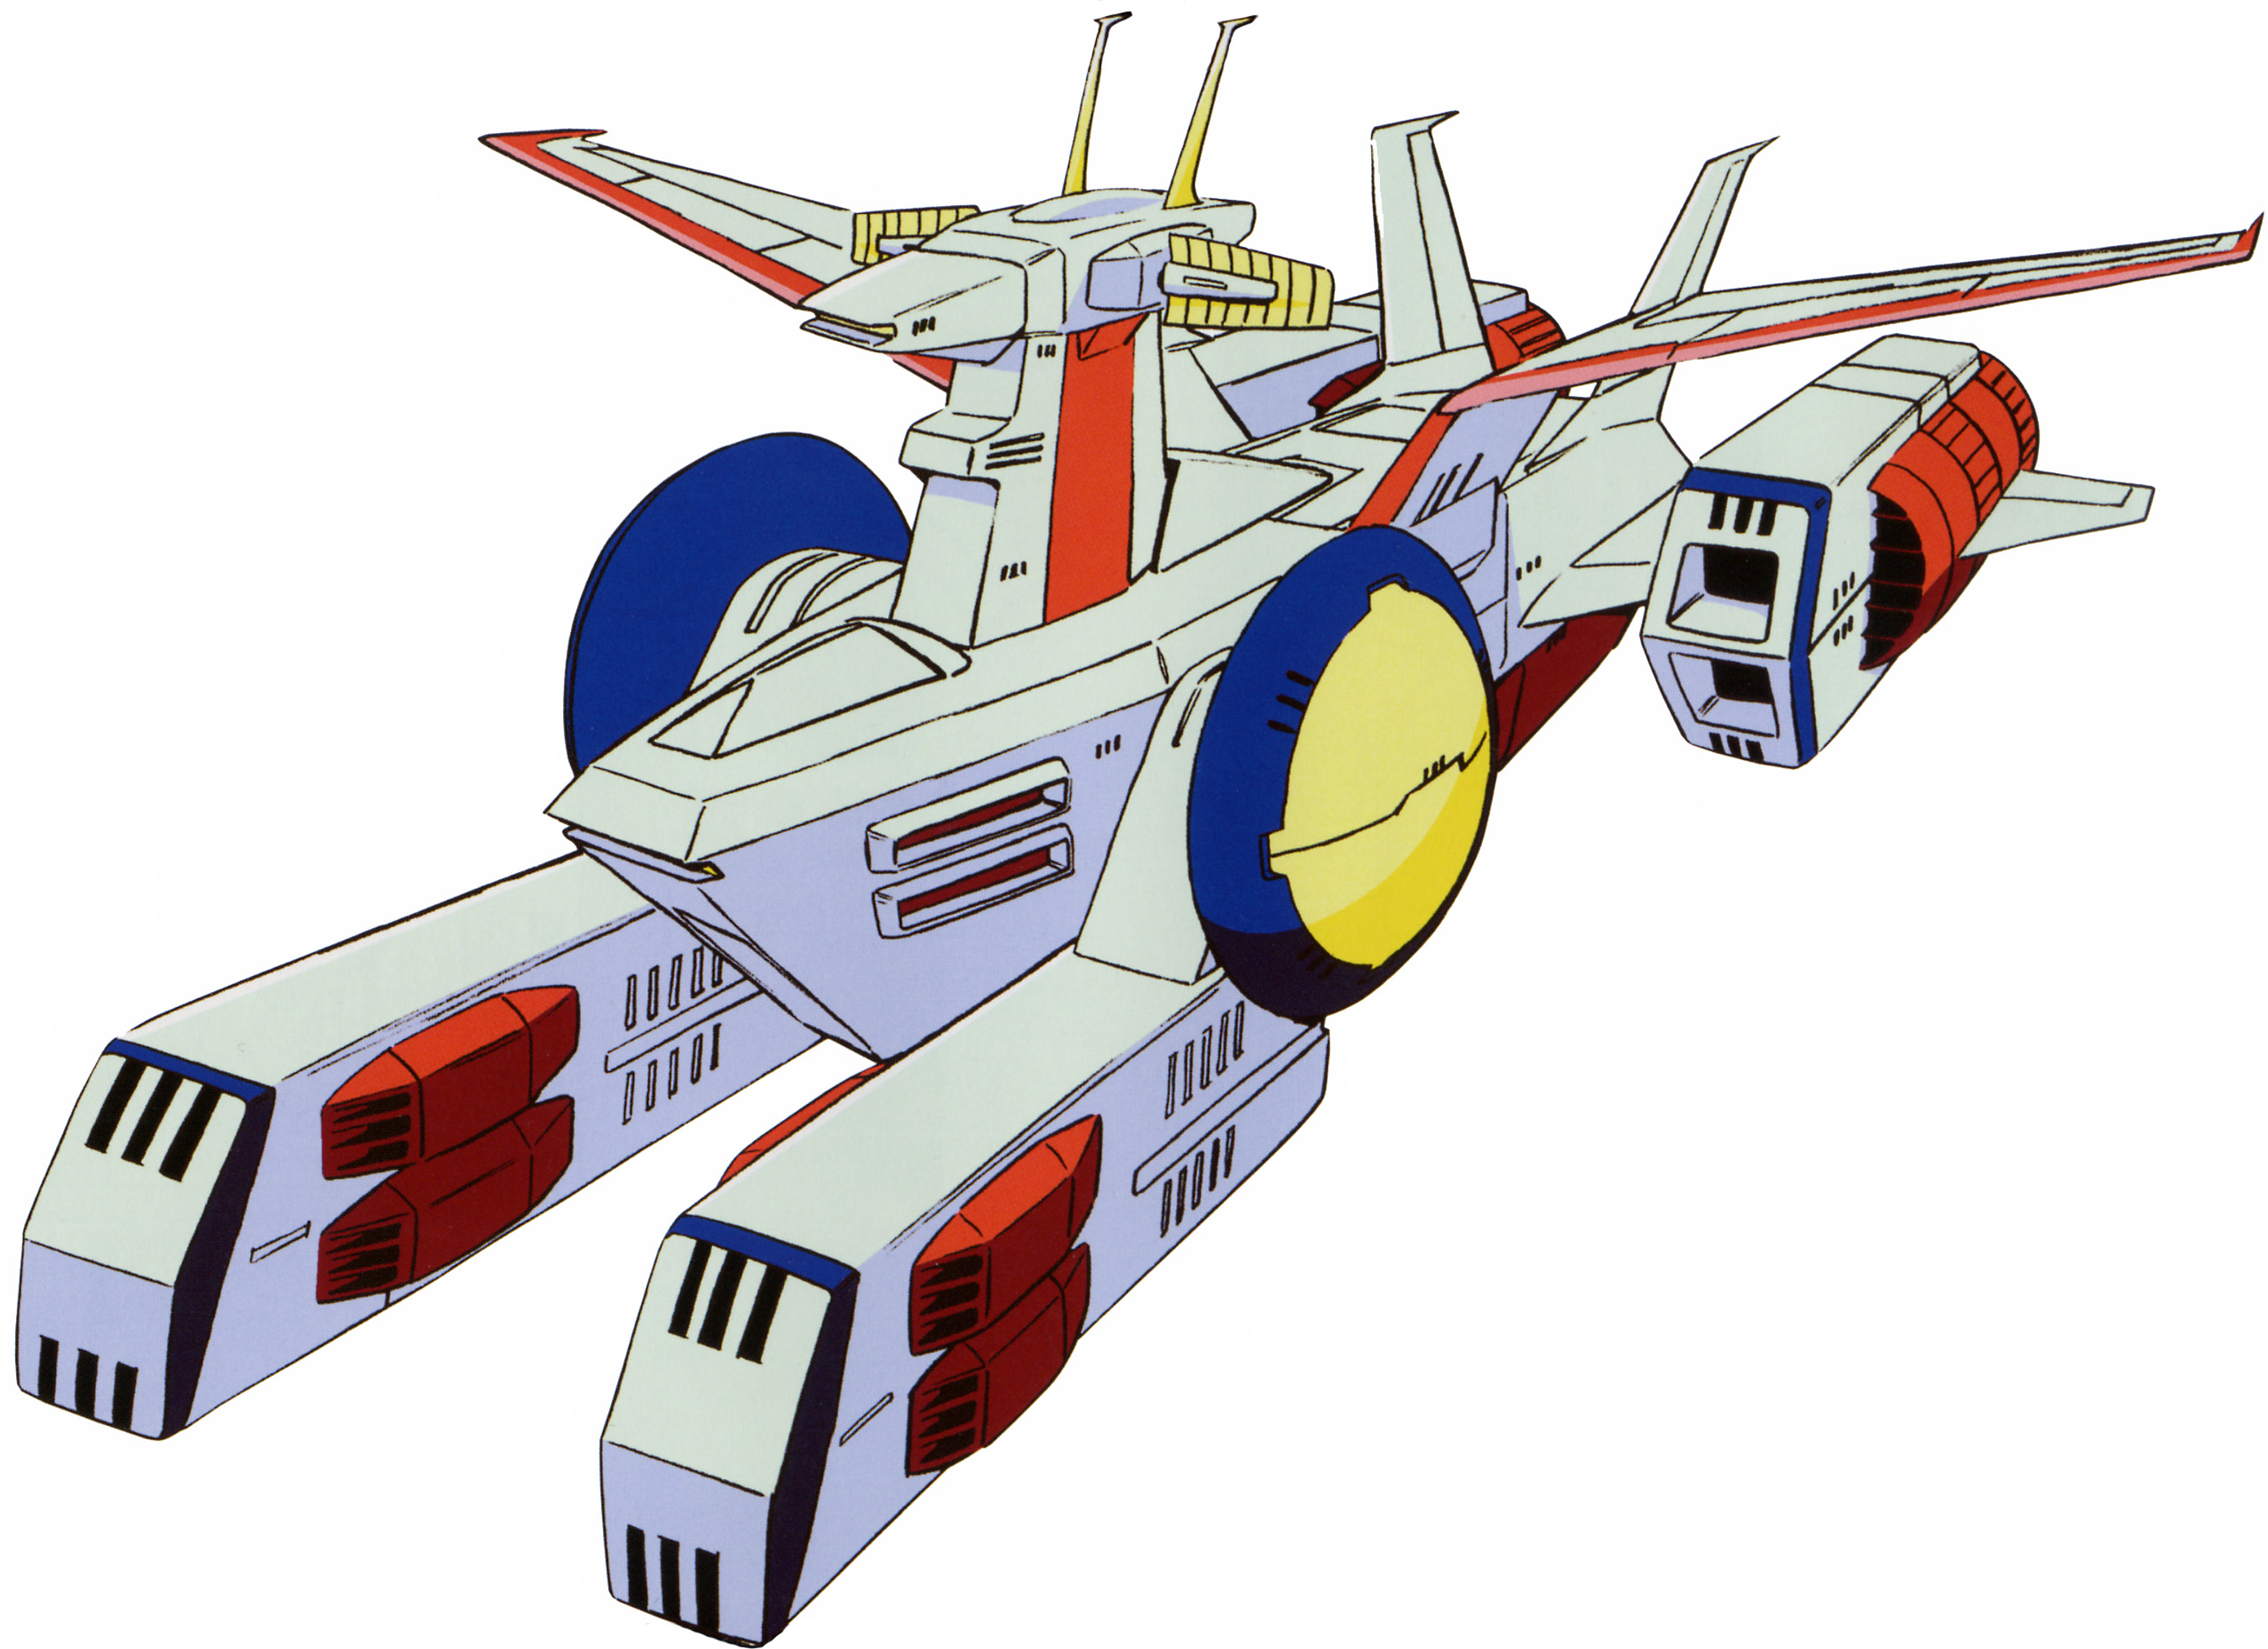 SCV-70 White Base | The Gundam Wiki | Fandom